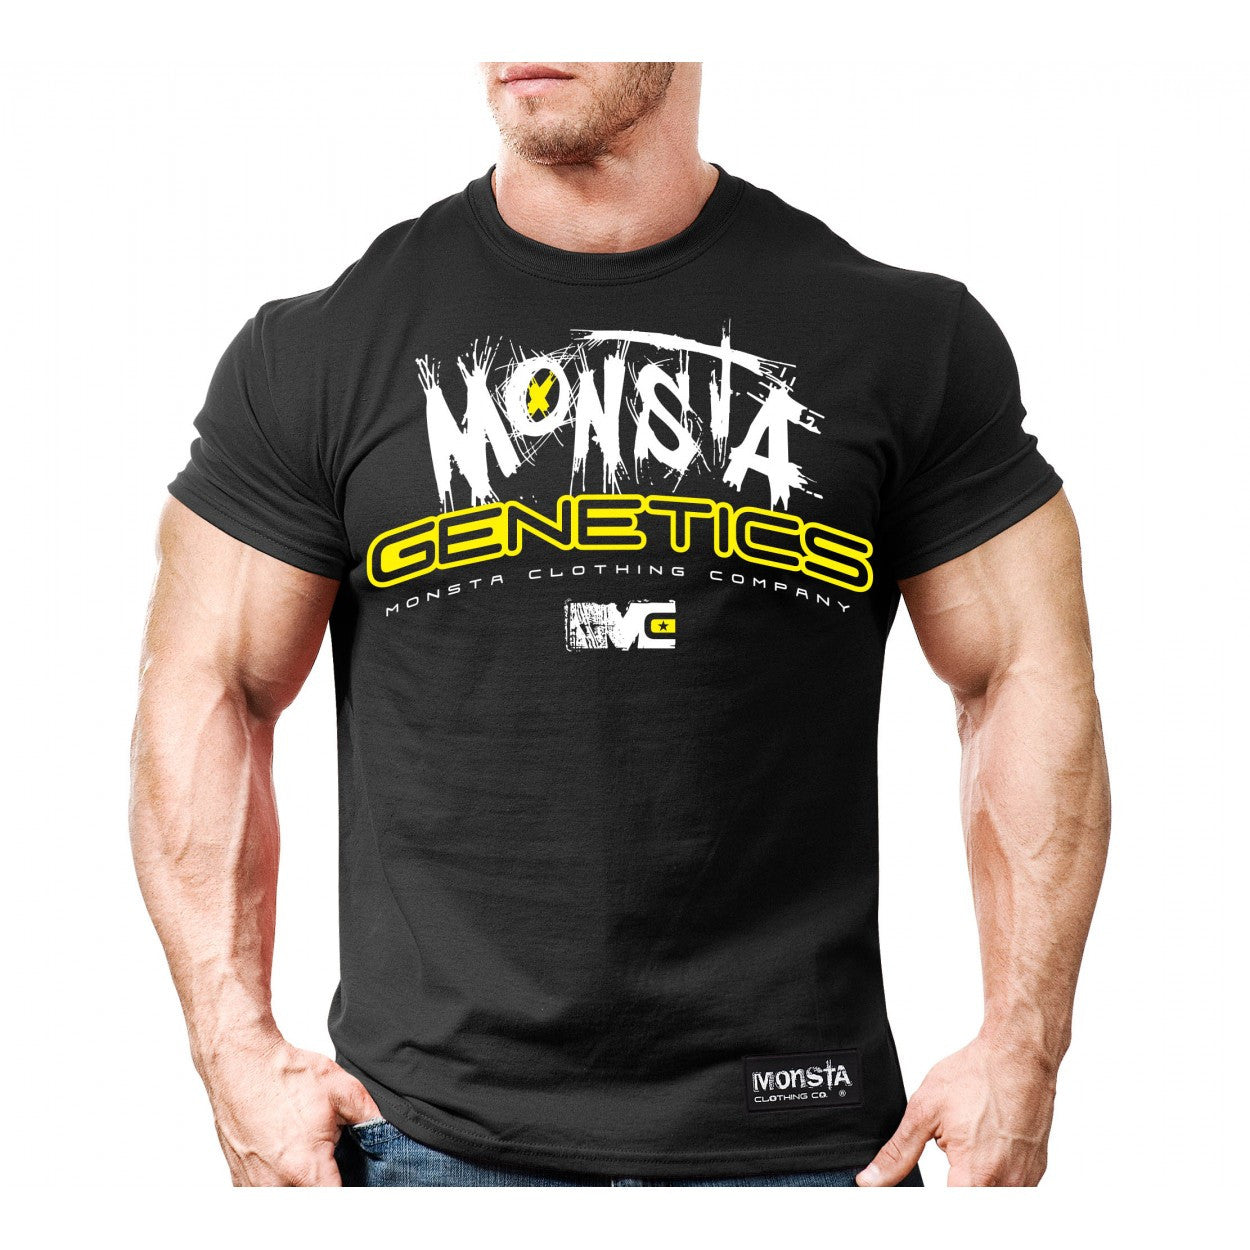 Tee: Monsta Genetics - Monsta Clothing Australia